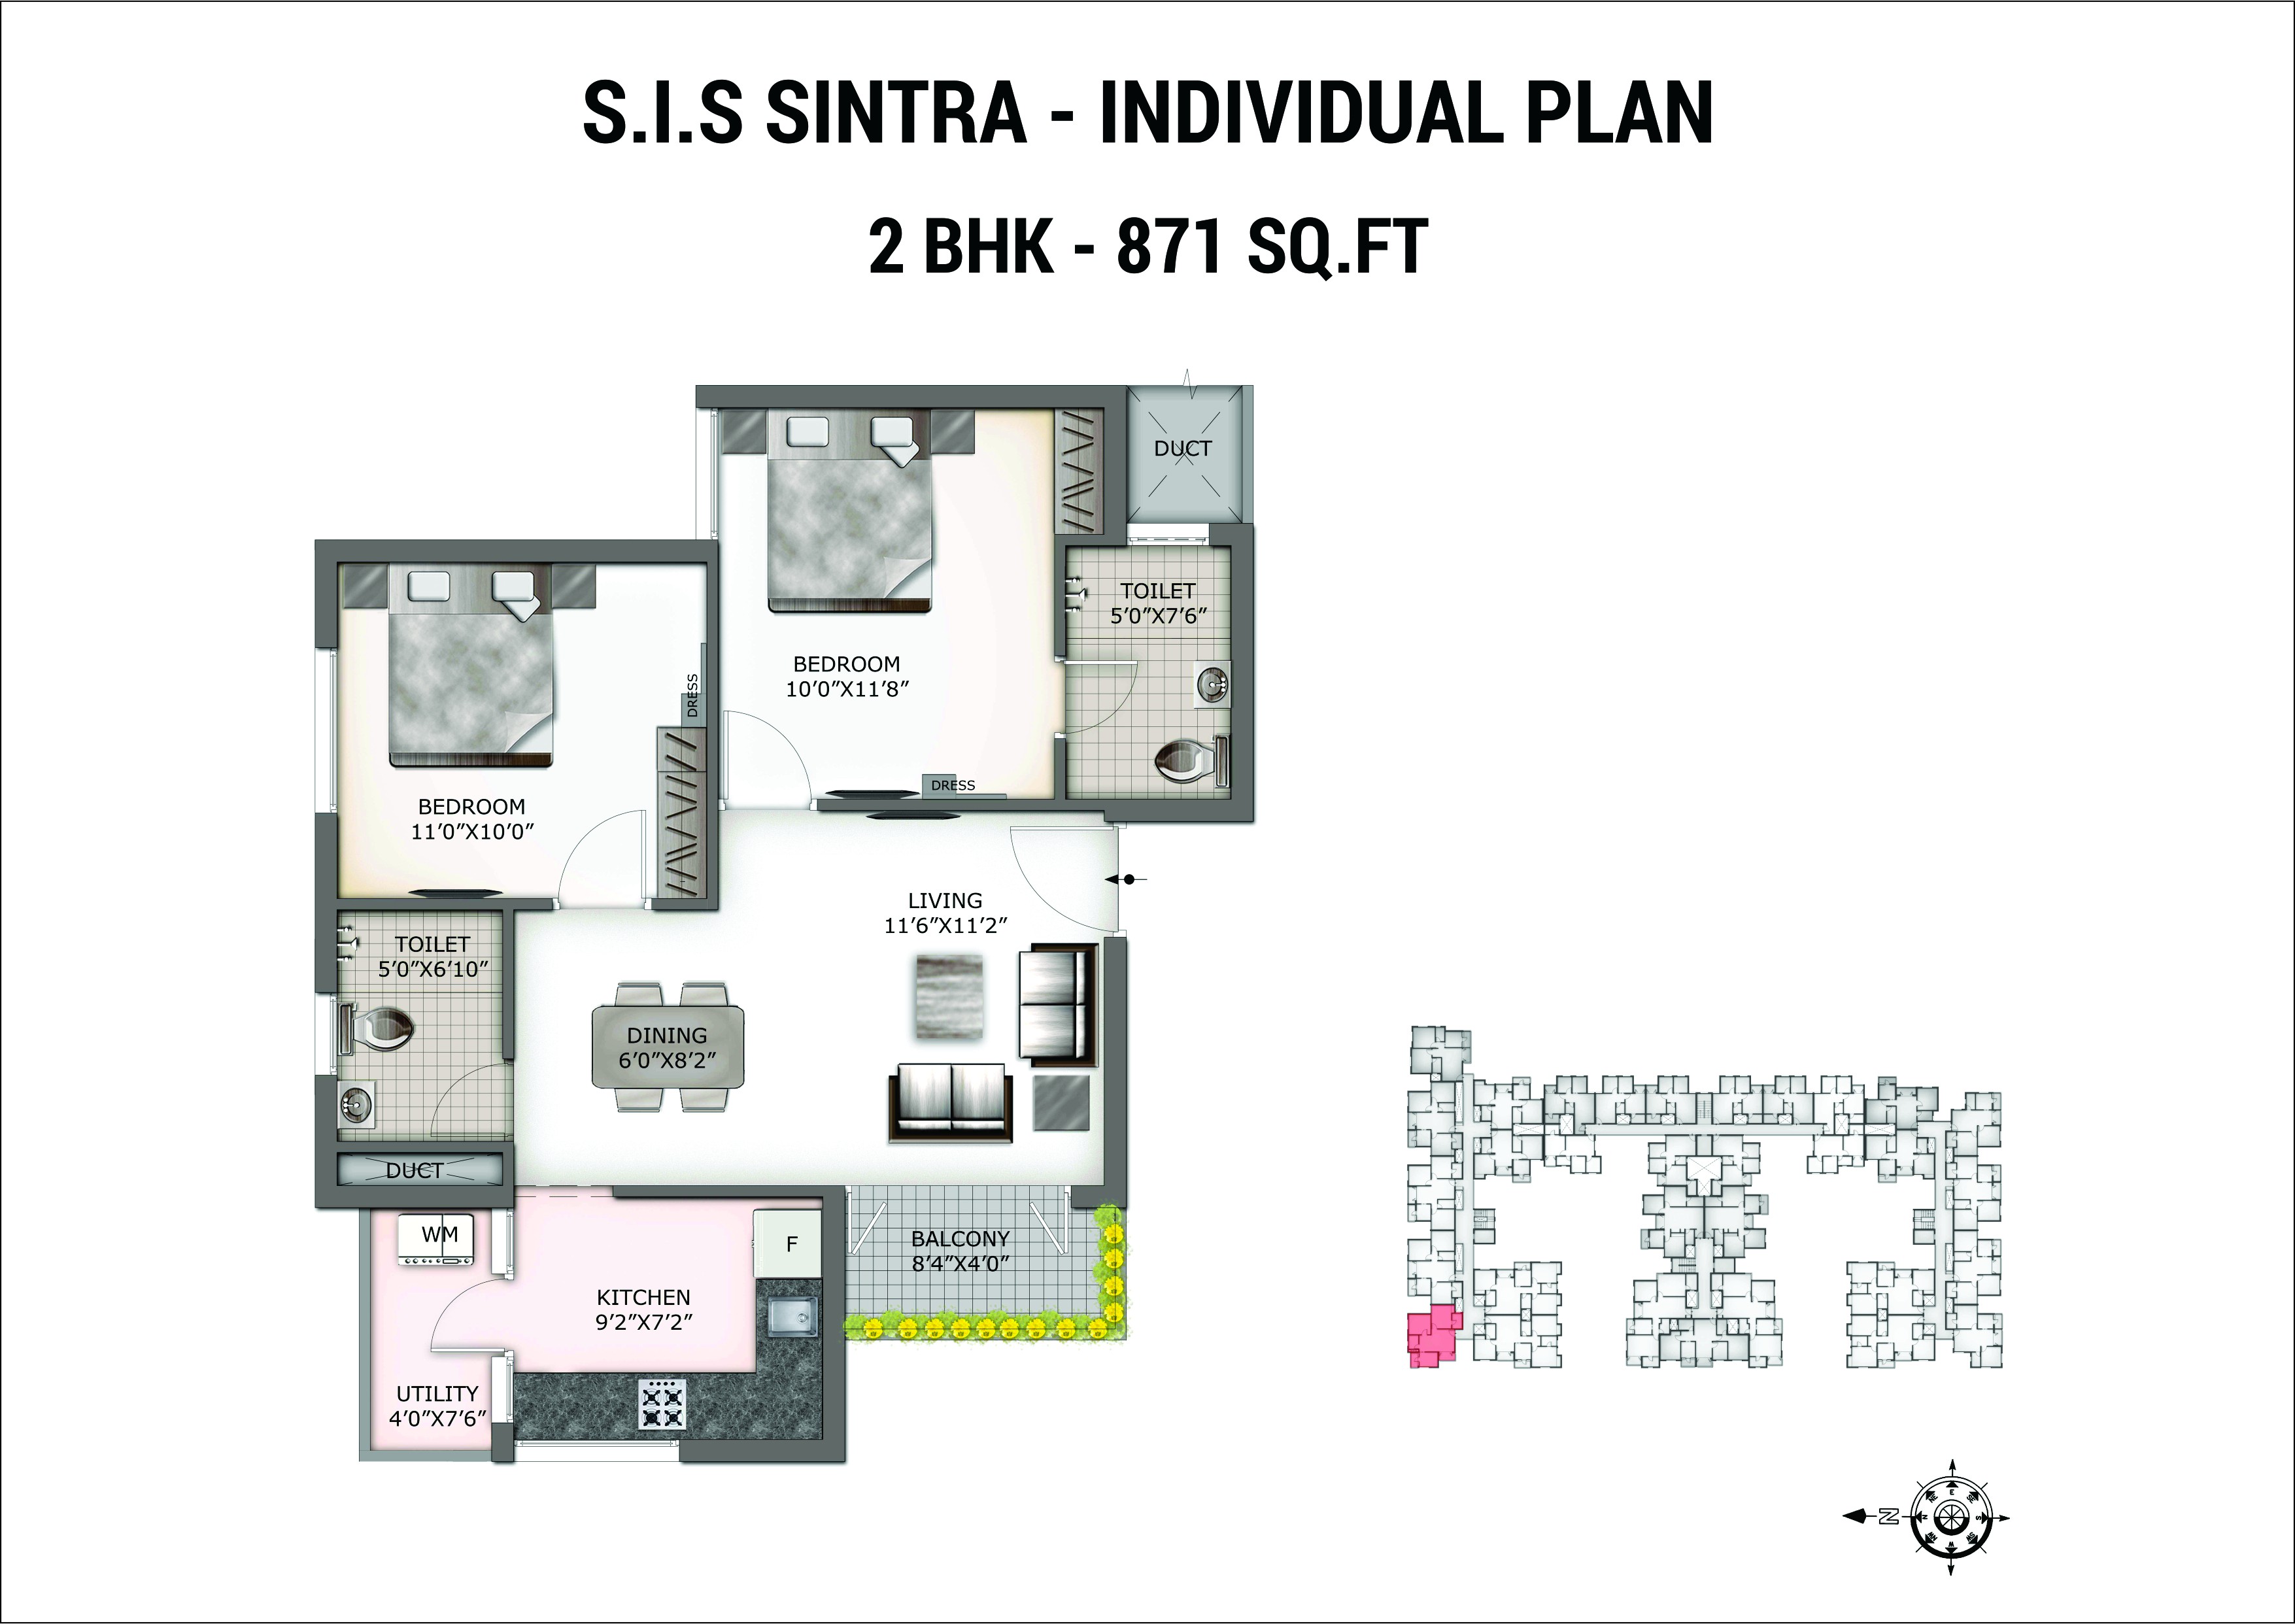 SIS Sintra floorplan 871sqft south facing